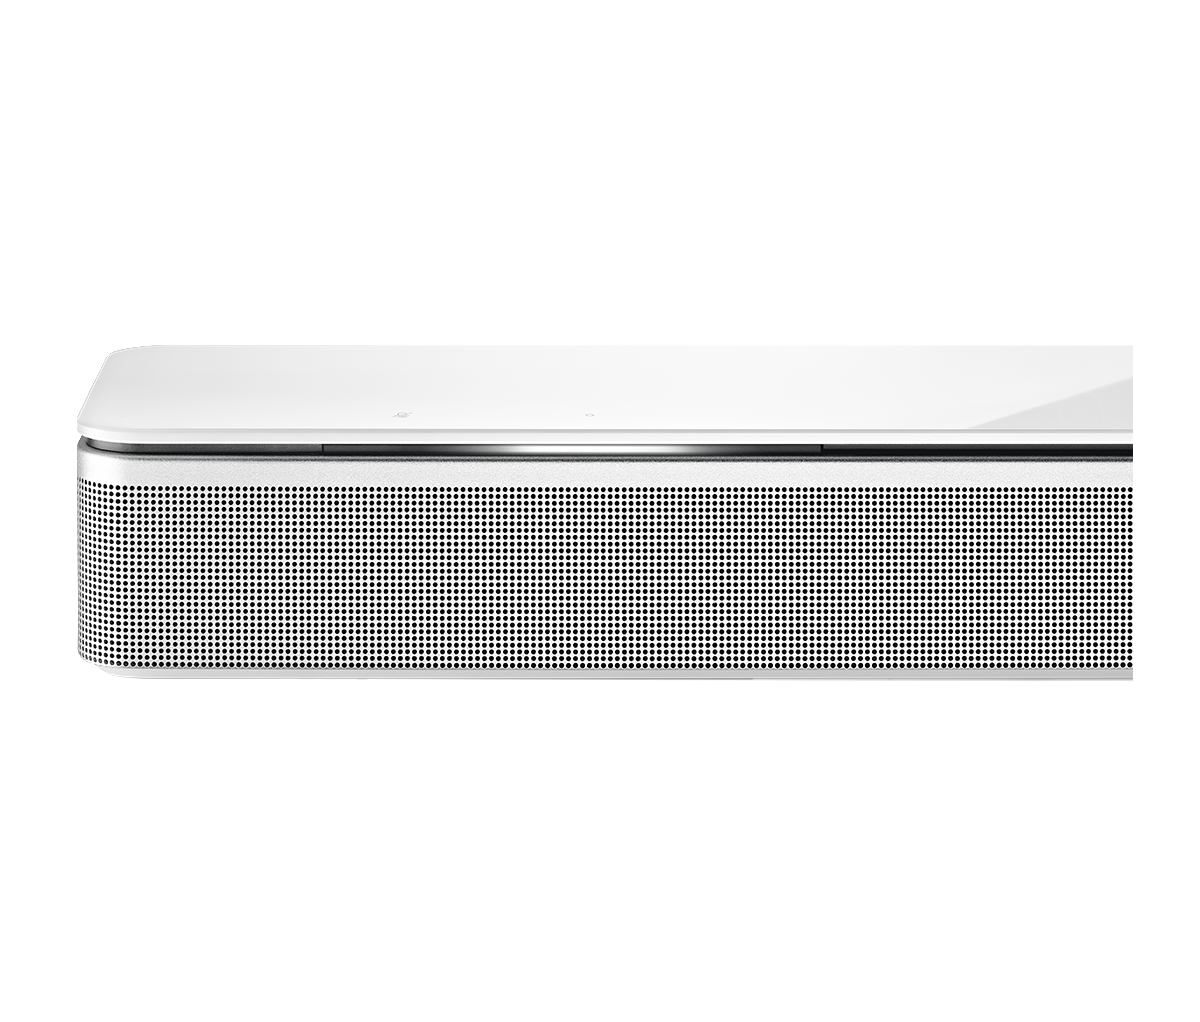 Bose Smart Soundbar 700 – Remis à Neuf Arctic White